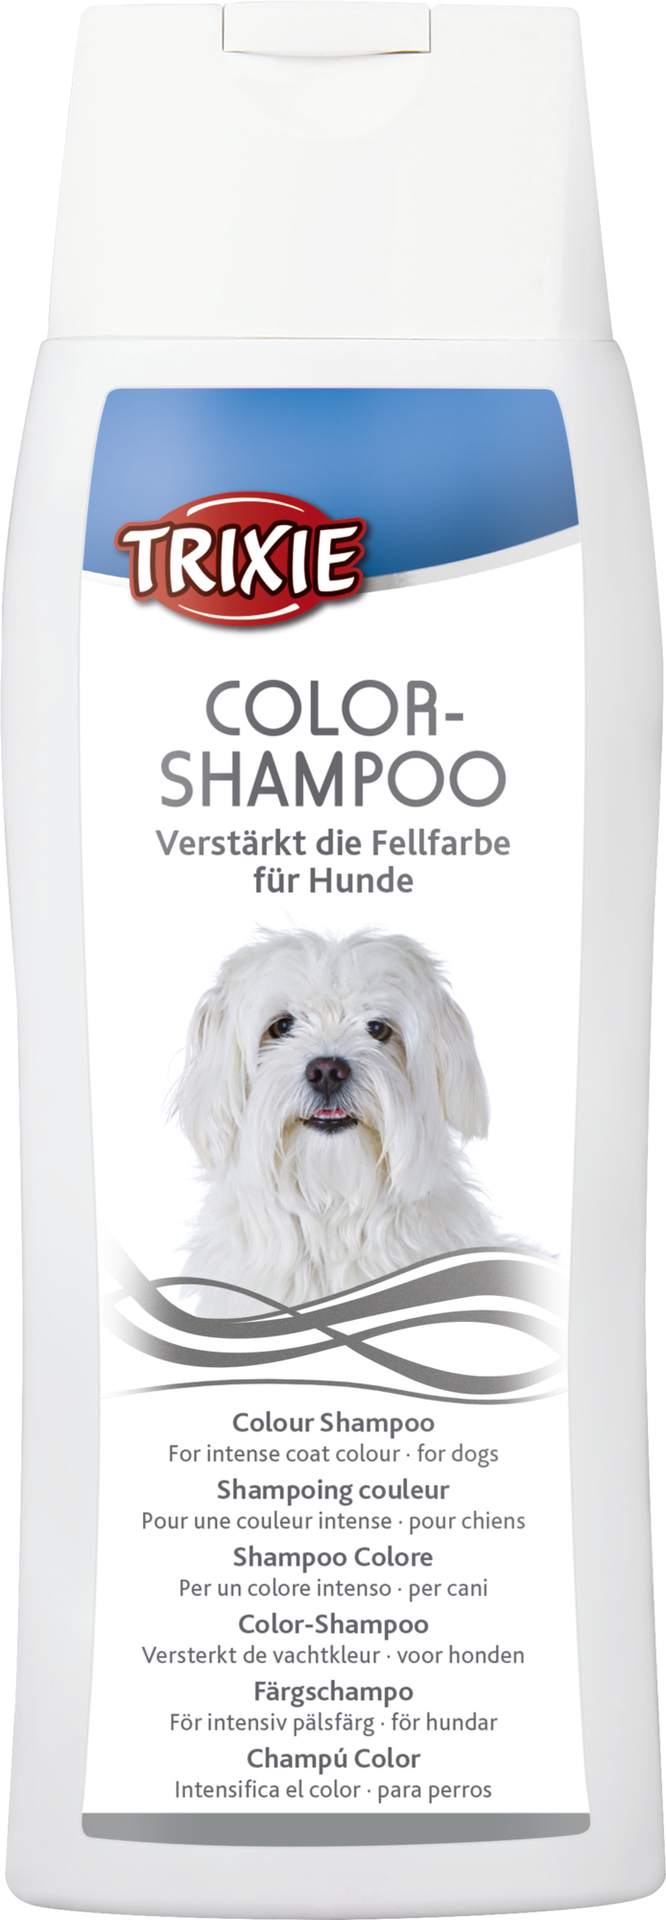 Trixie Heimtierbedarf Color-Shampoo